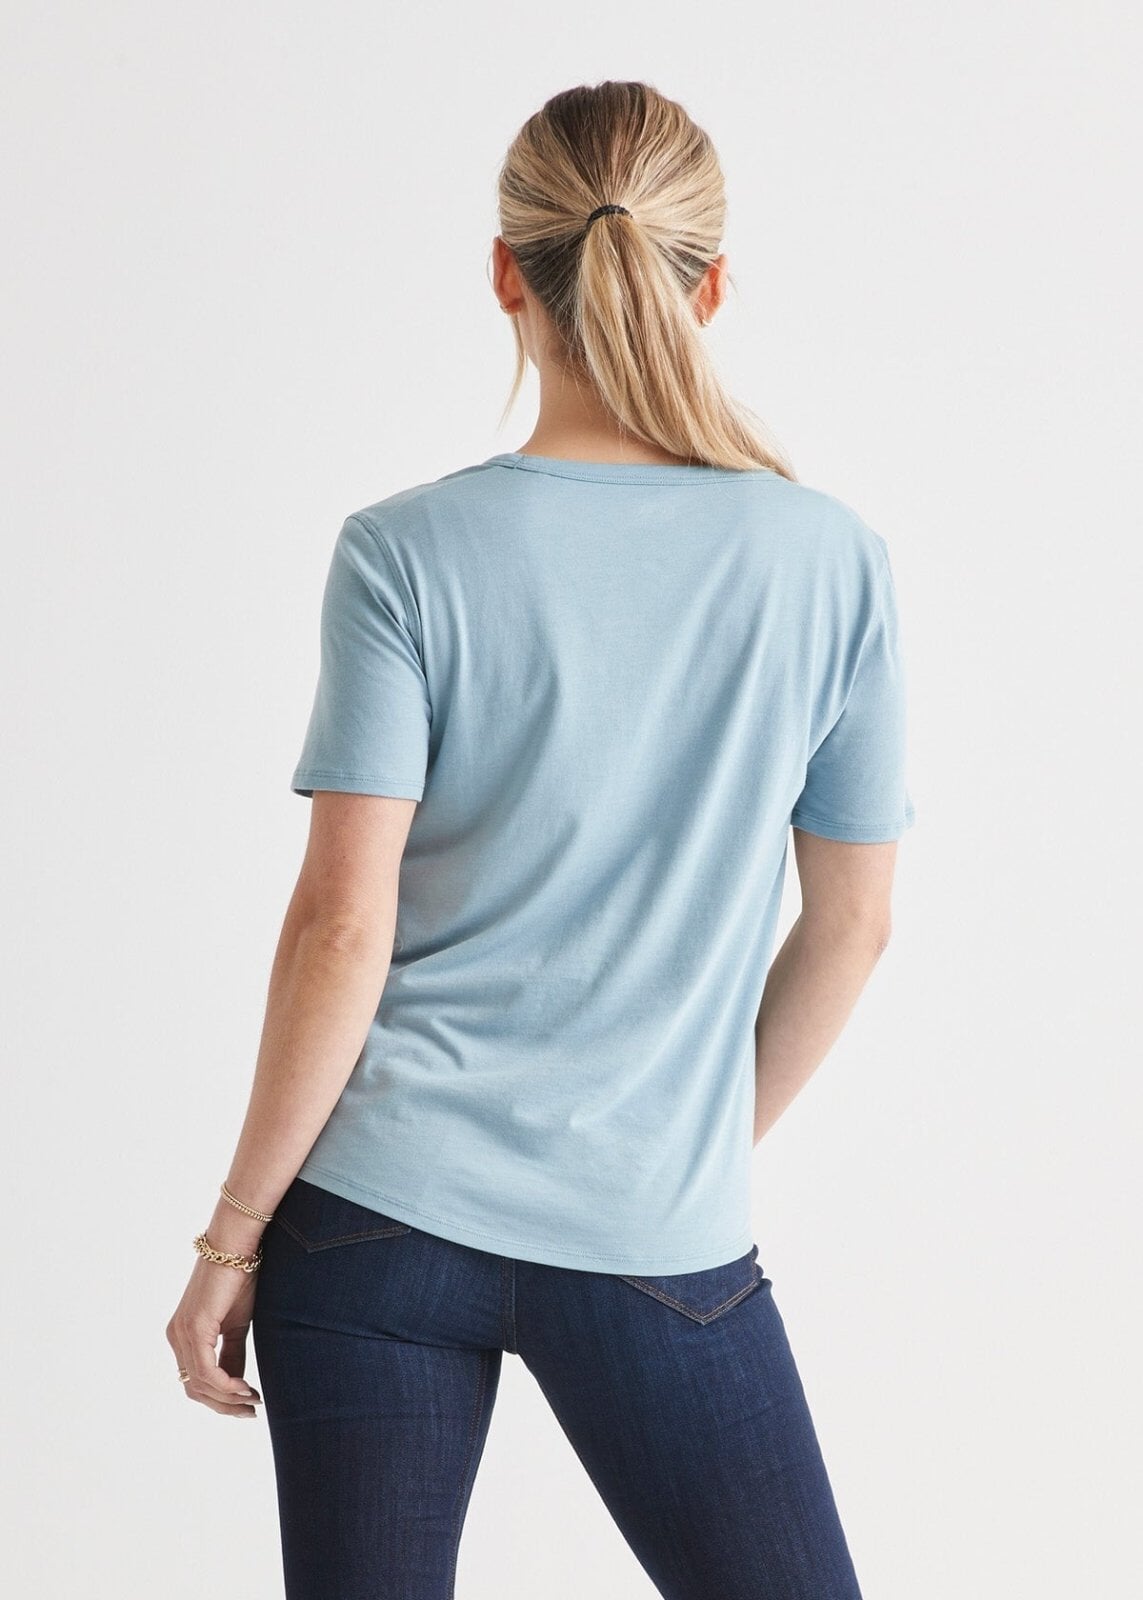 Women's Soft Lightweight Blue V-Neck T-Shirt Back